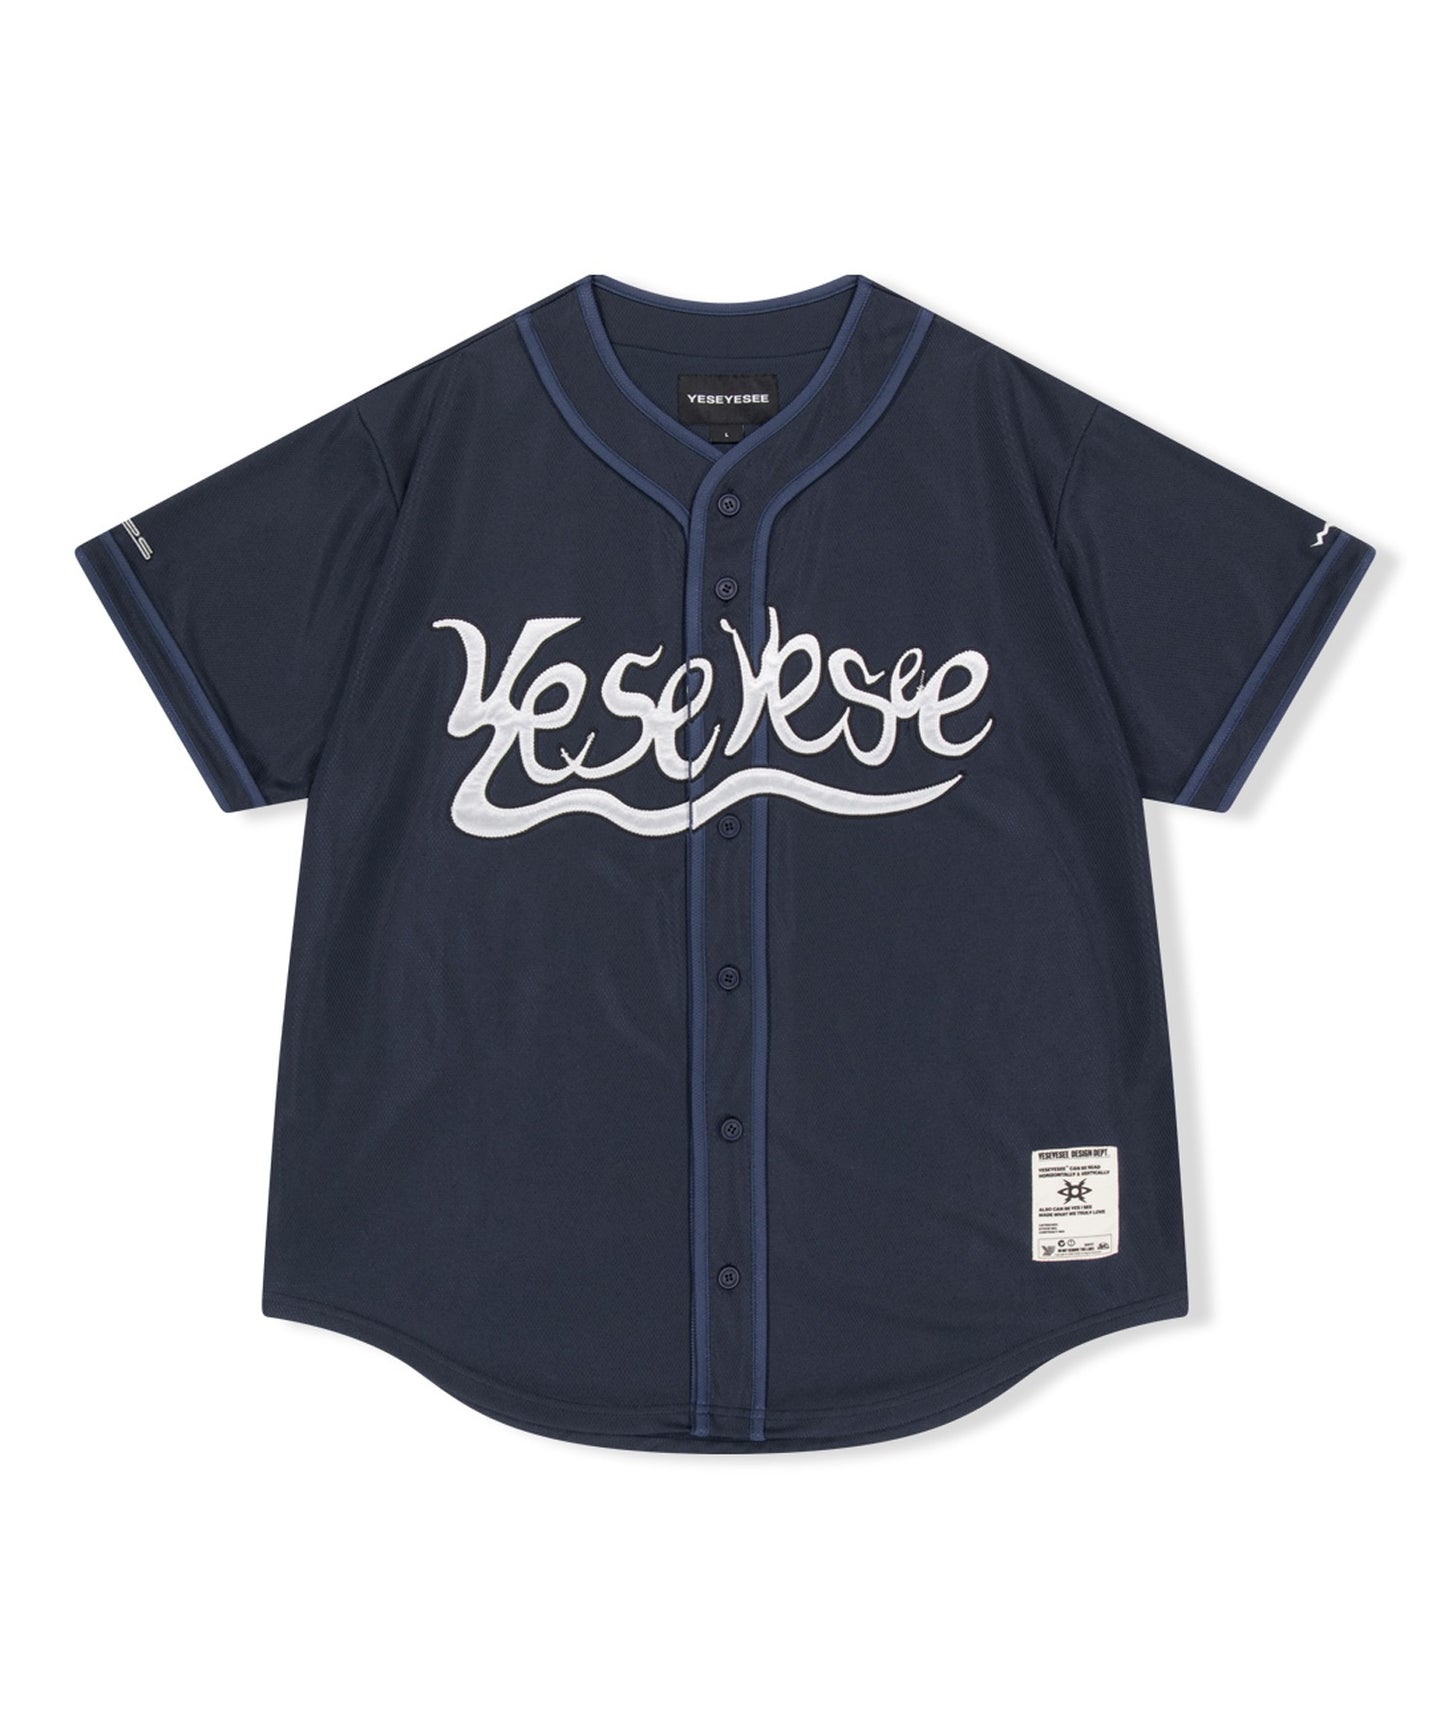 Y.E.S Baseball Jersey